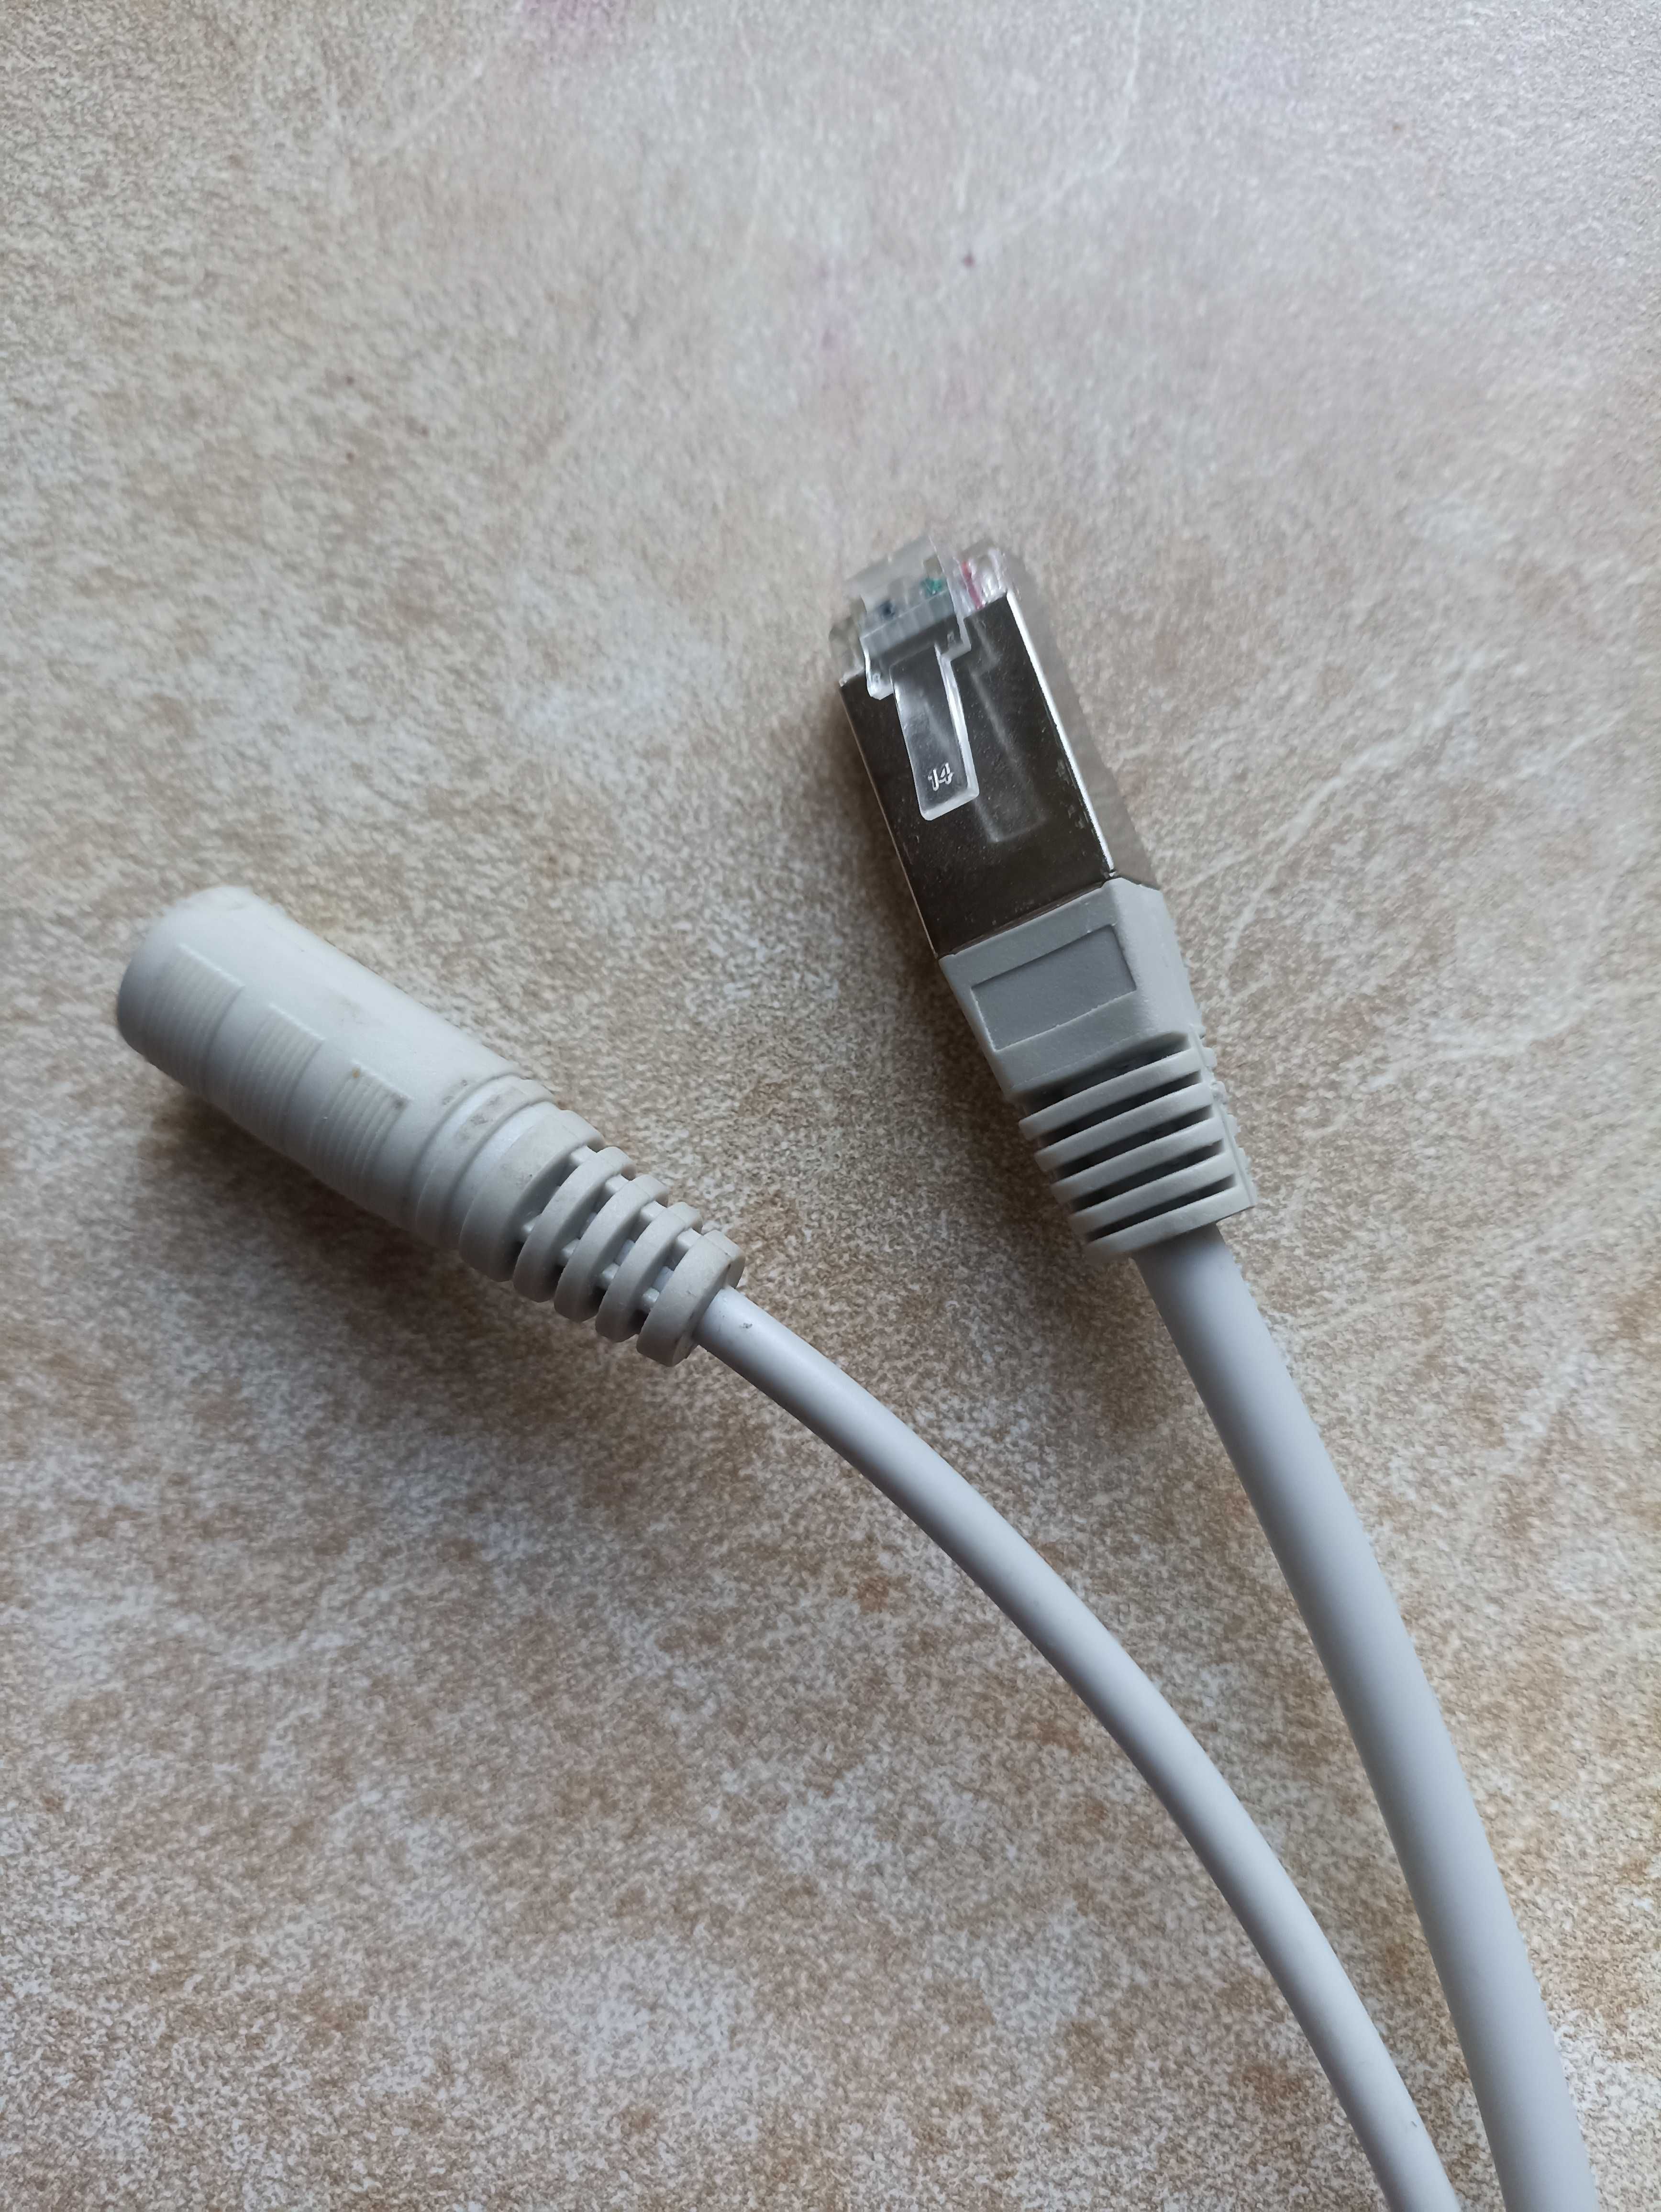 USB кабель Data+ Power